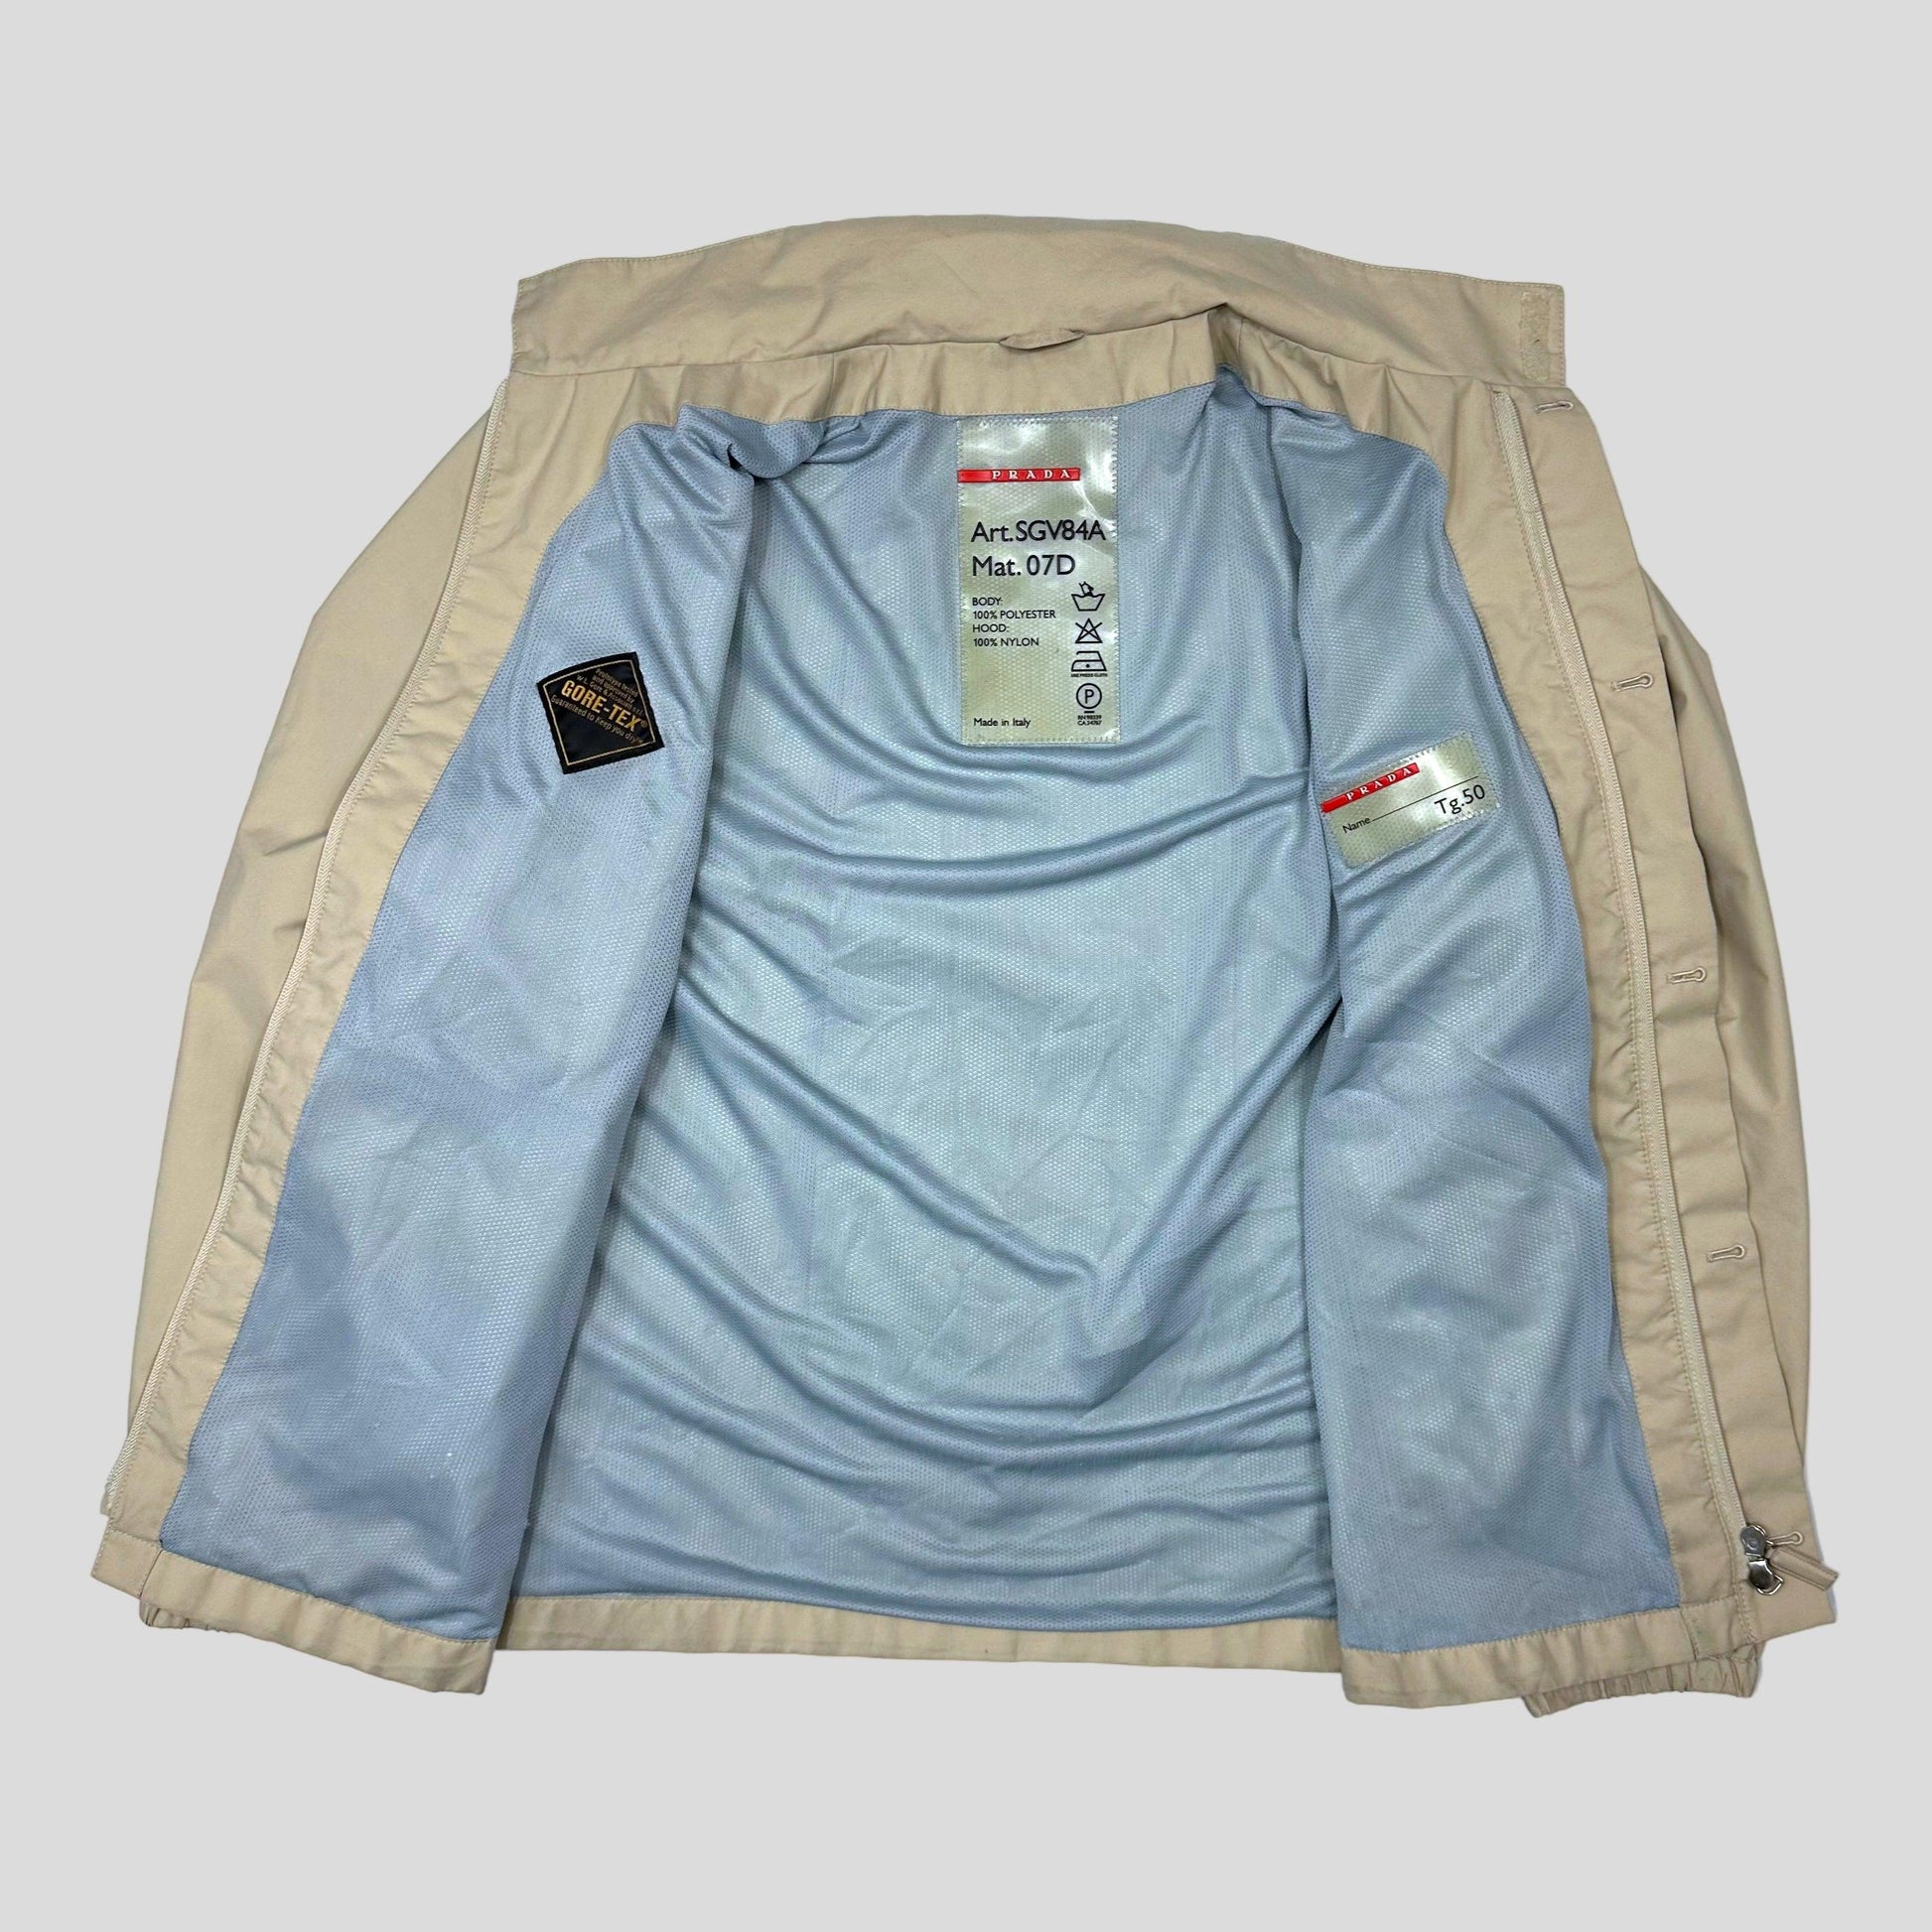 Prada Sport SS01 Goretex Stash Pocket Harrington Jacket - M/L - Known Source